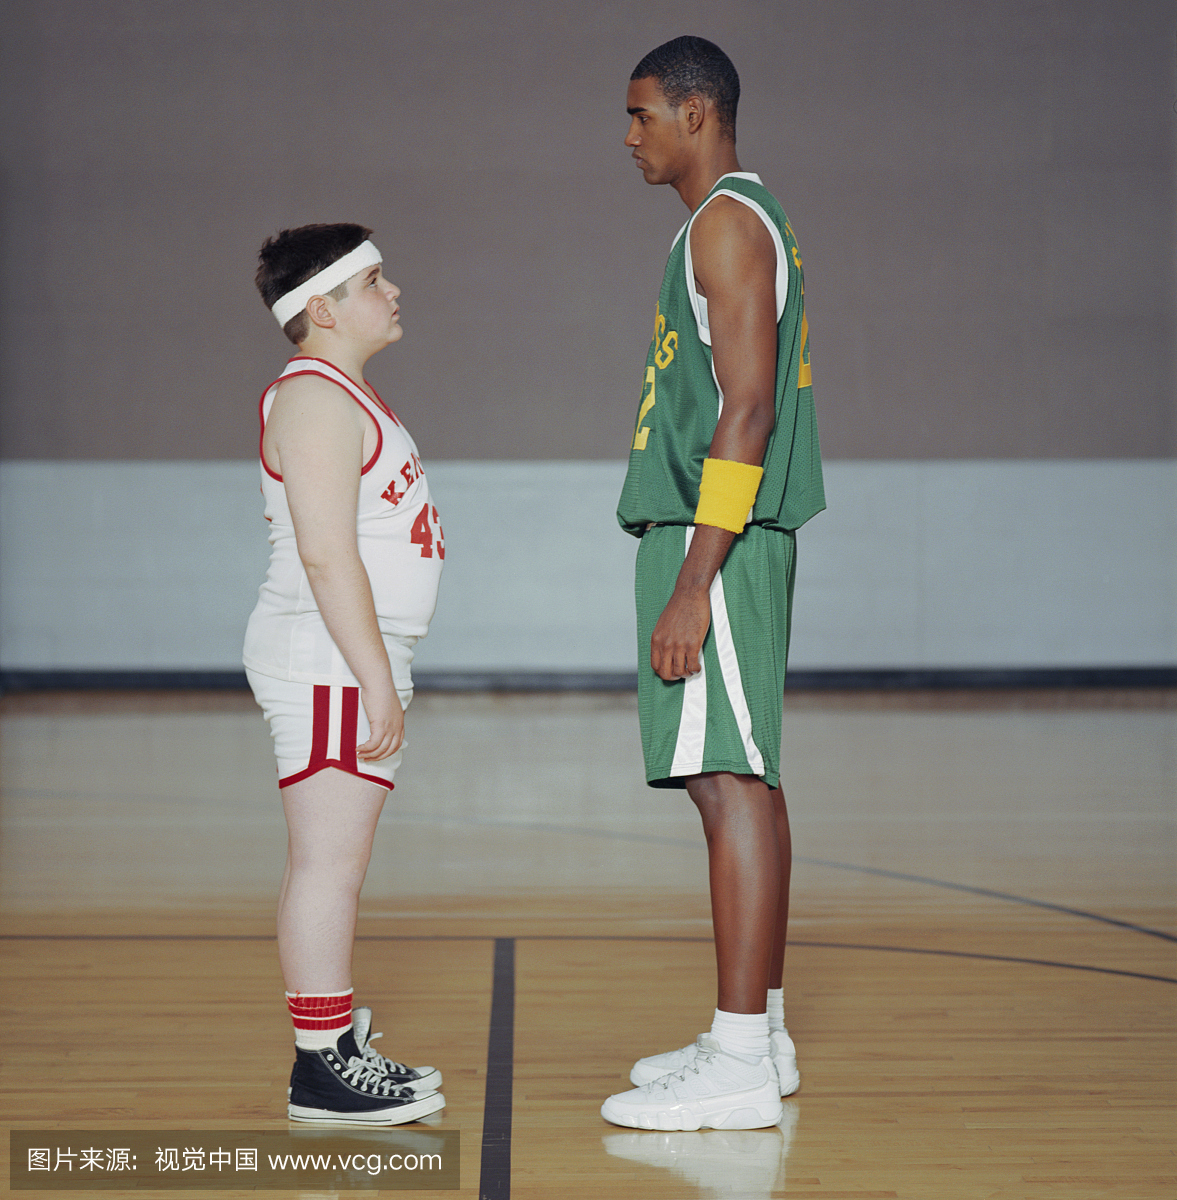 Basketball Player Facing Taller Opponent